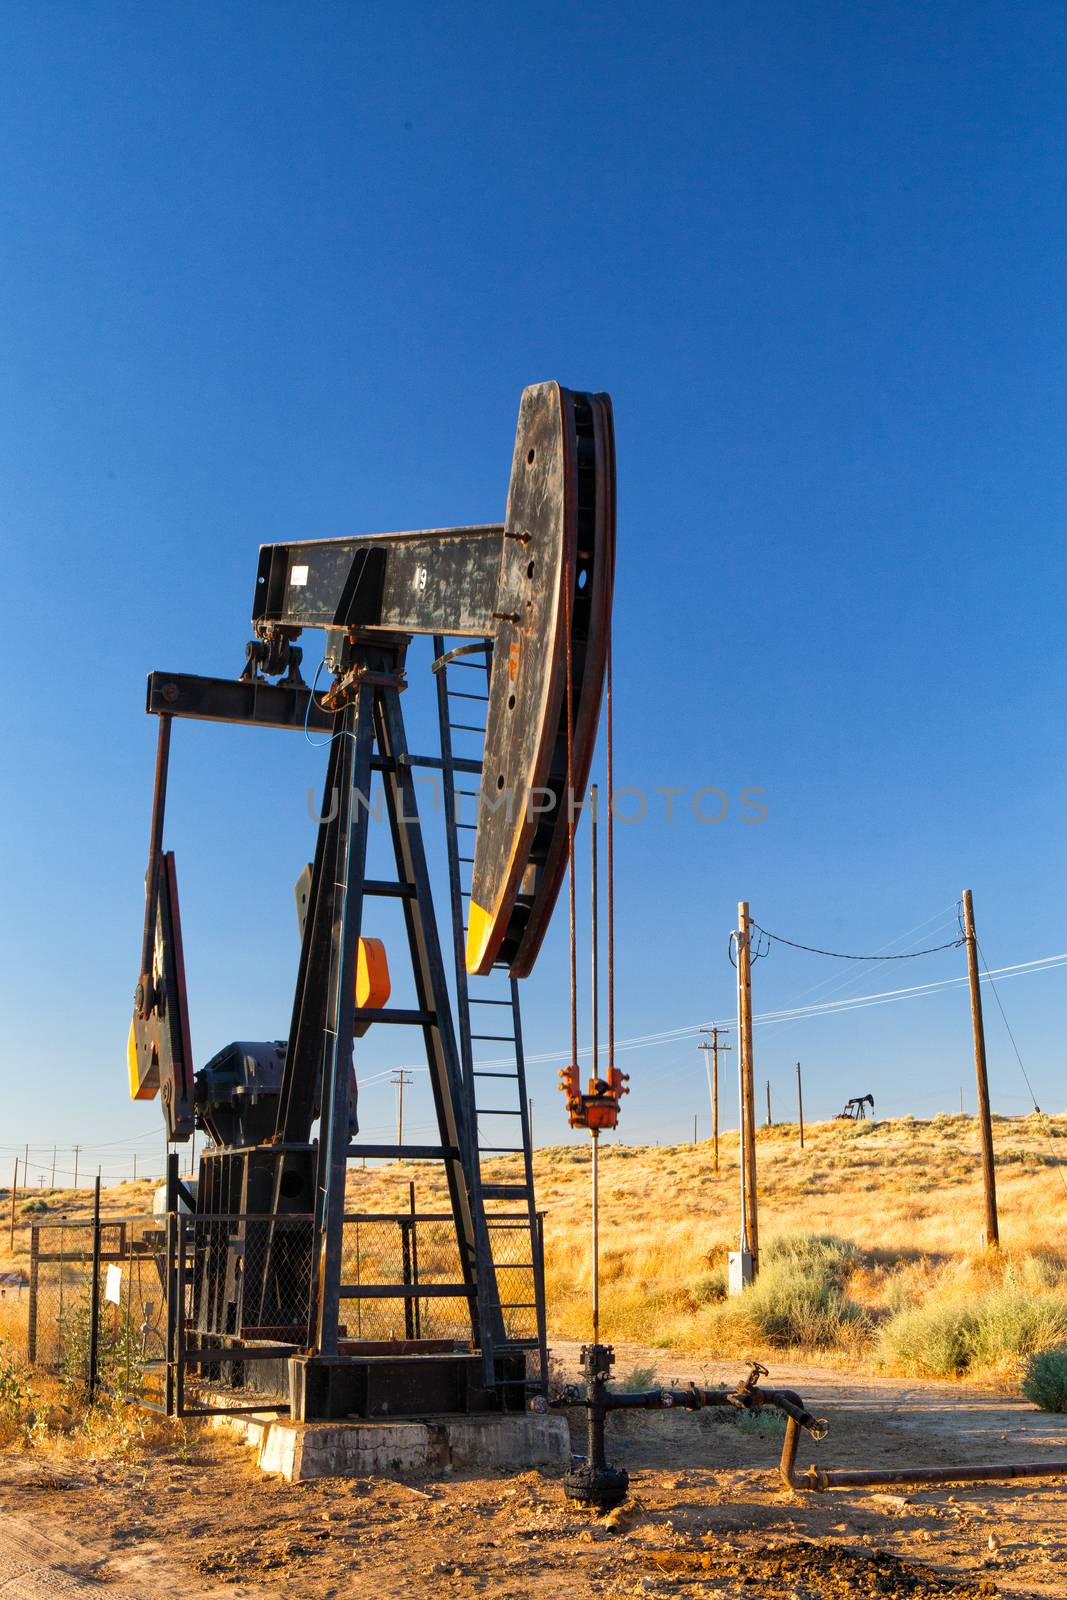 Working oil pump in Nevada desert,  America